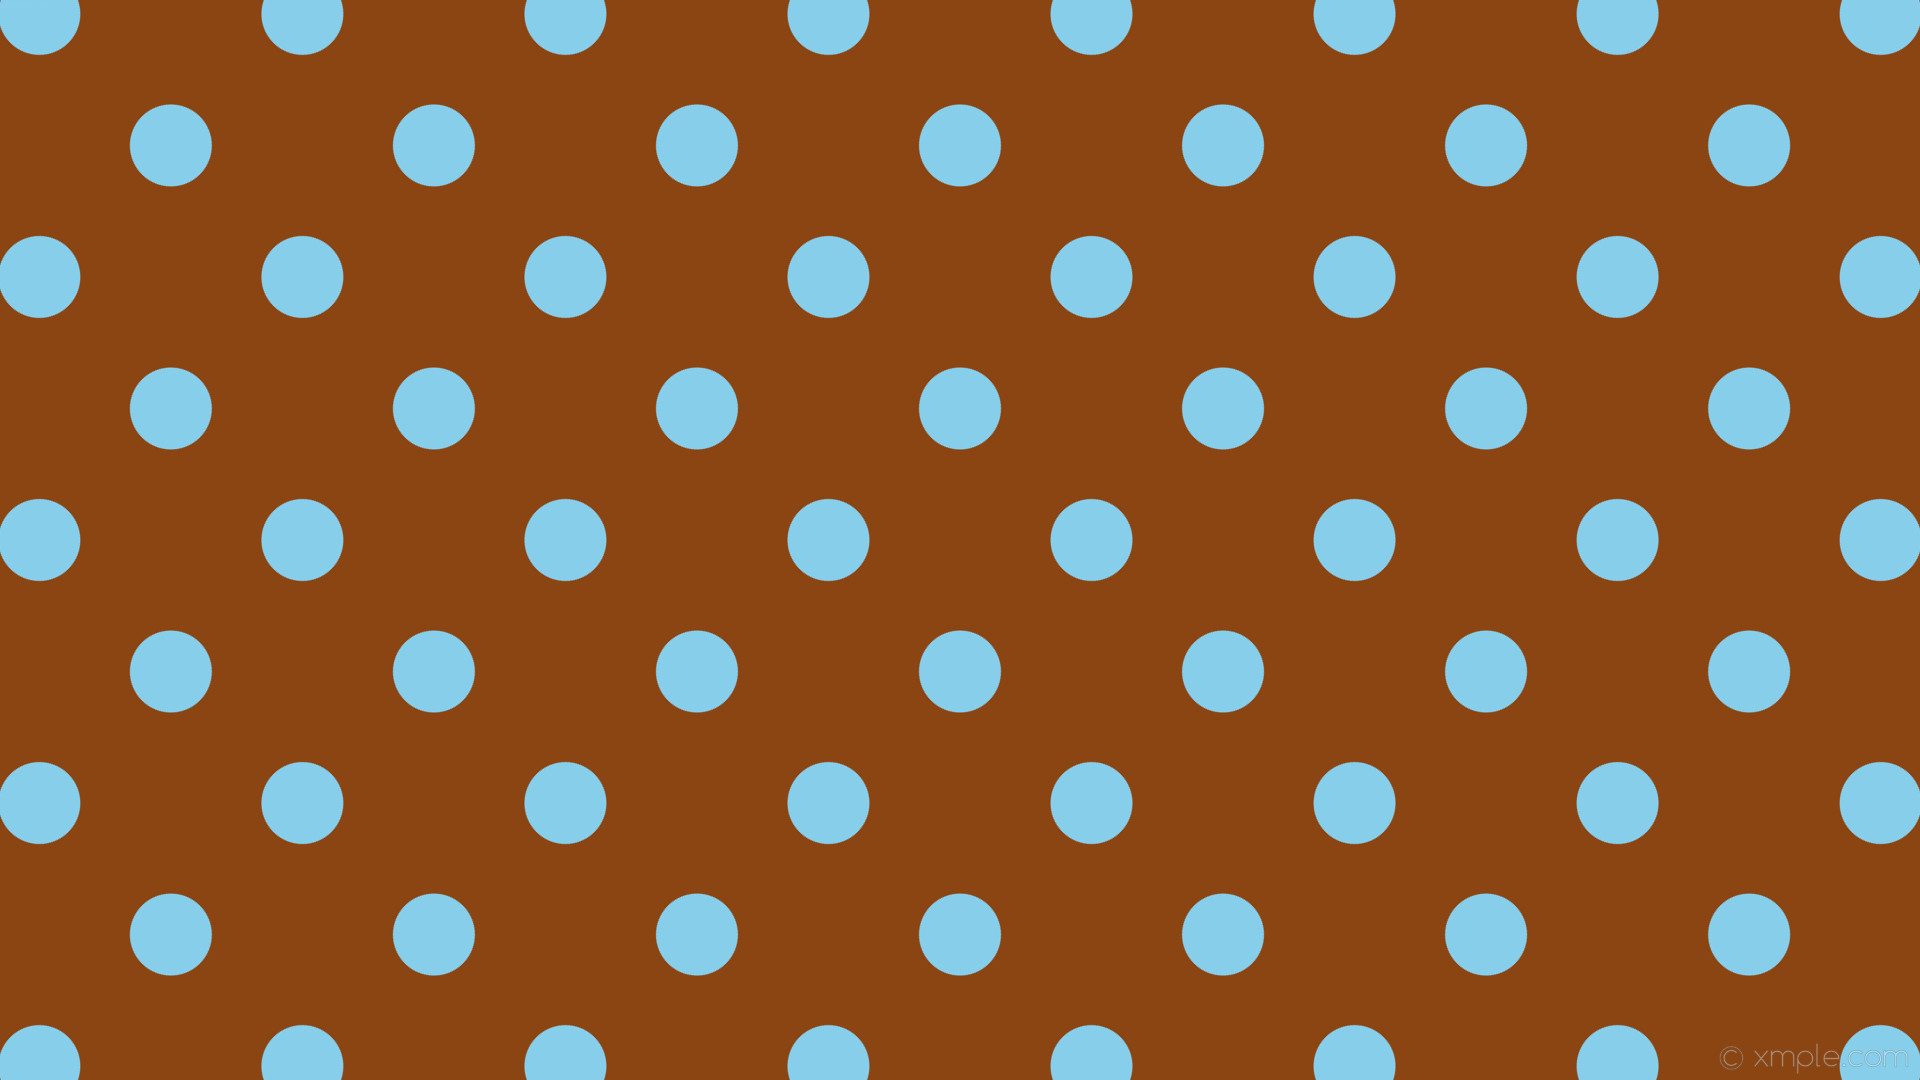 Wallpaper spots brown blue dots polka saddle brown sky blue b4513 ceeb 135